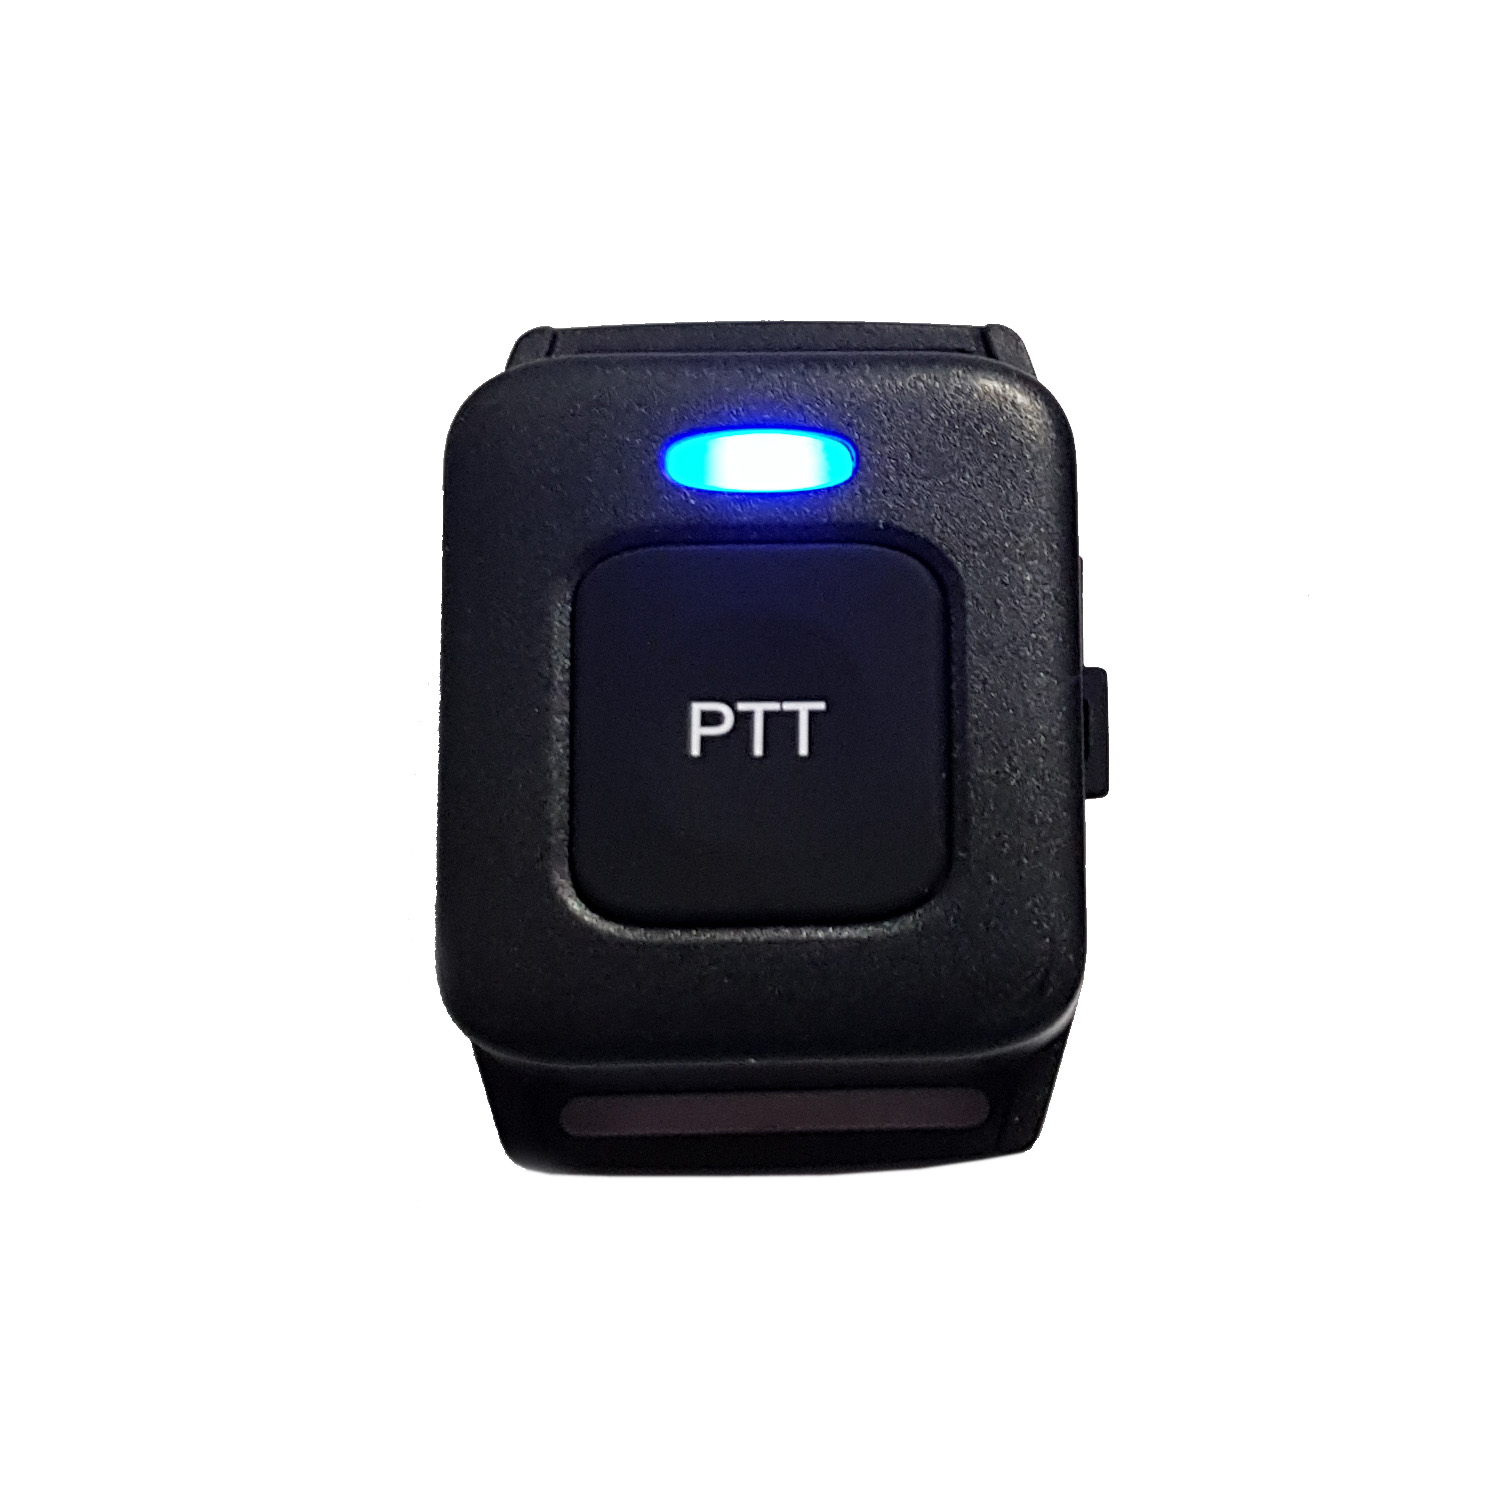 Anytone BP-01 Bluetooth PTT